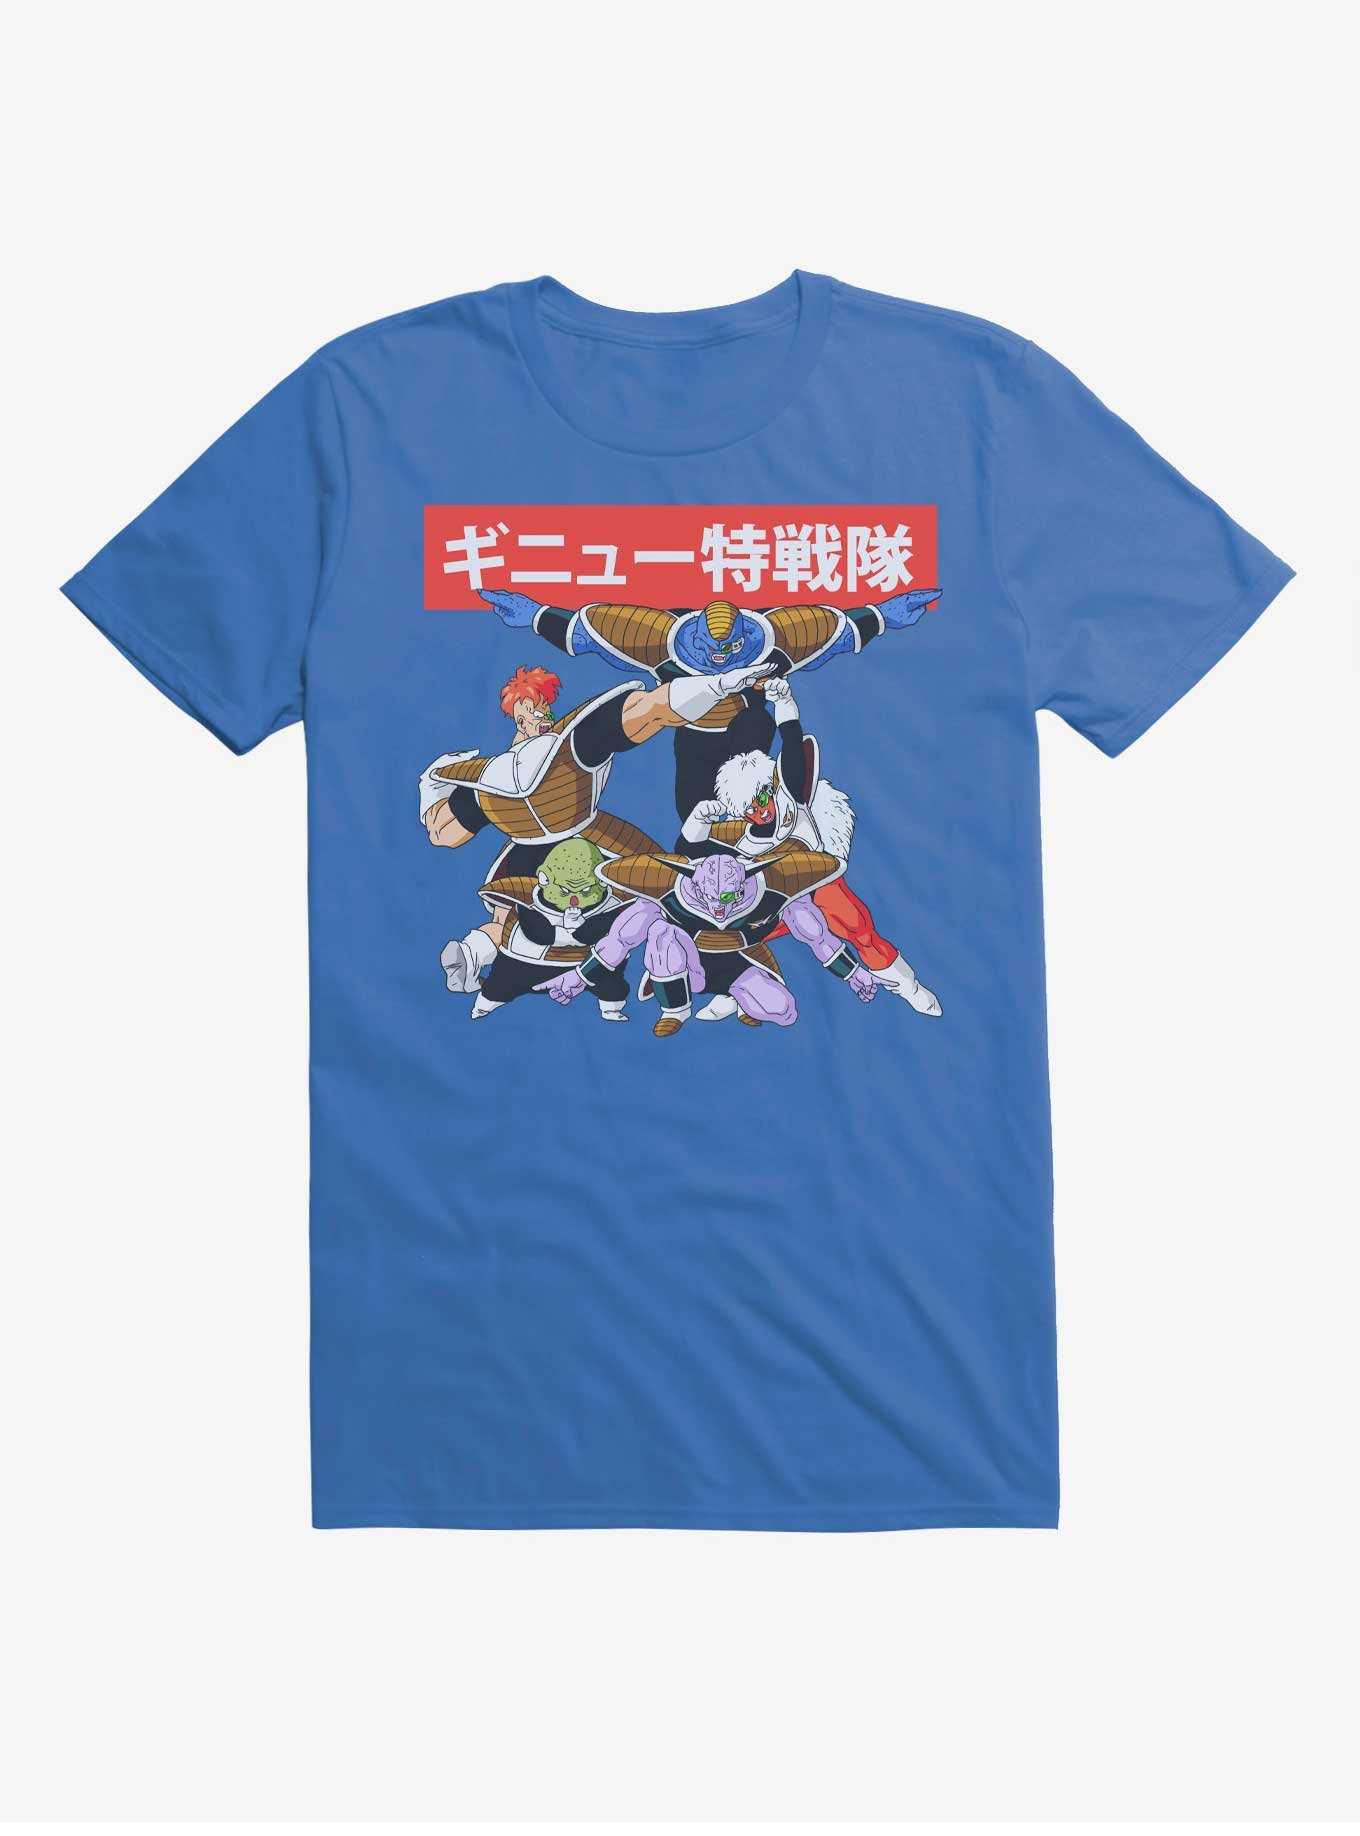 Dragon Ball Z Group Pose T-Shirt, , hi-res